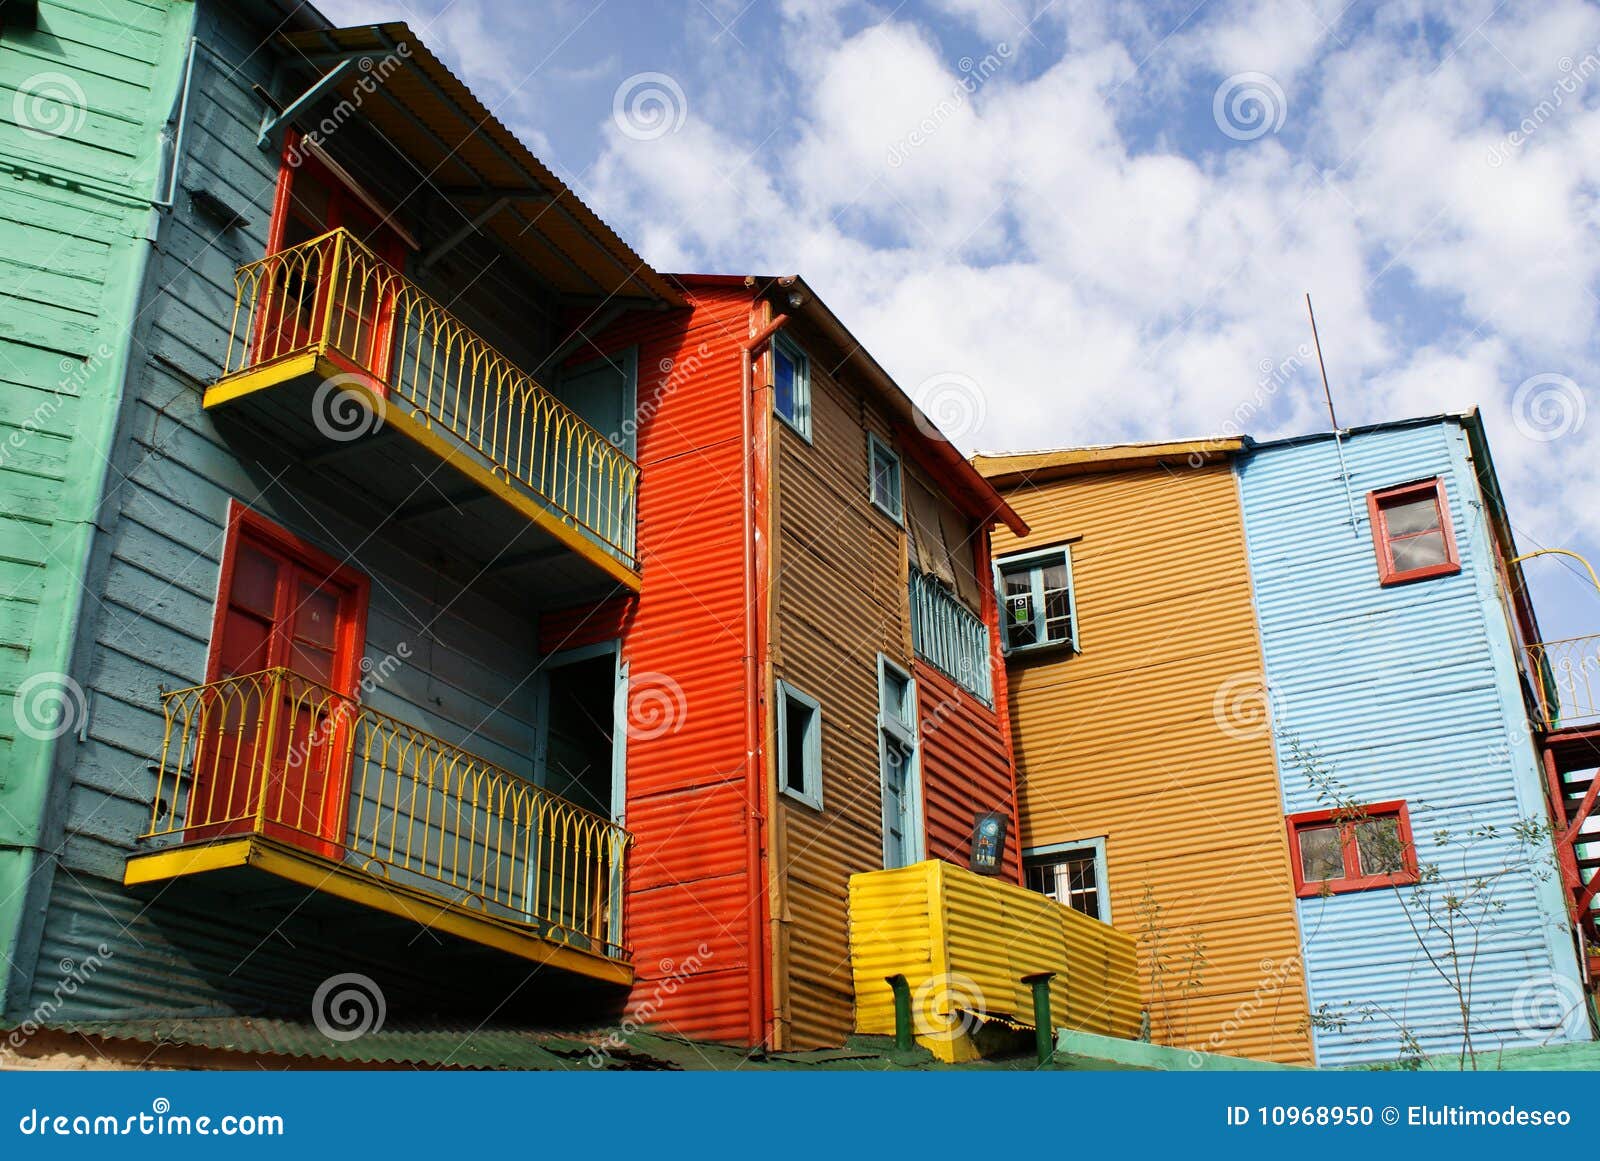 houses in la boca, argentina